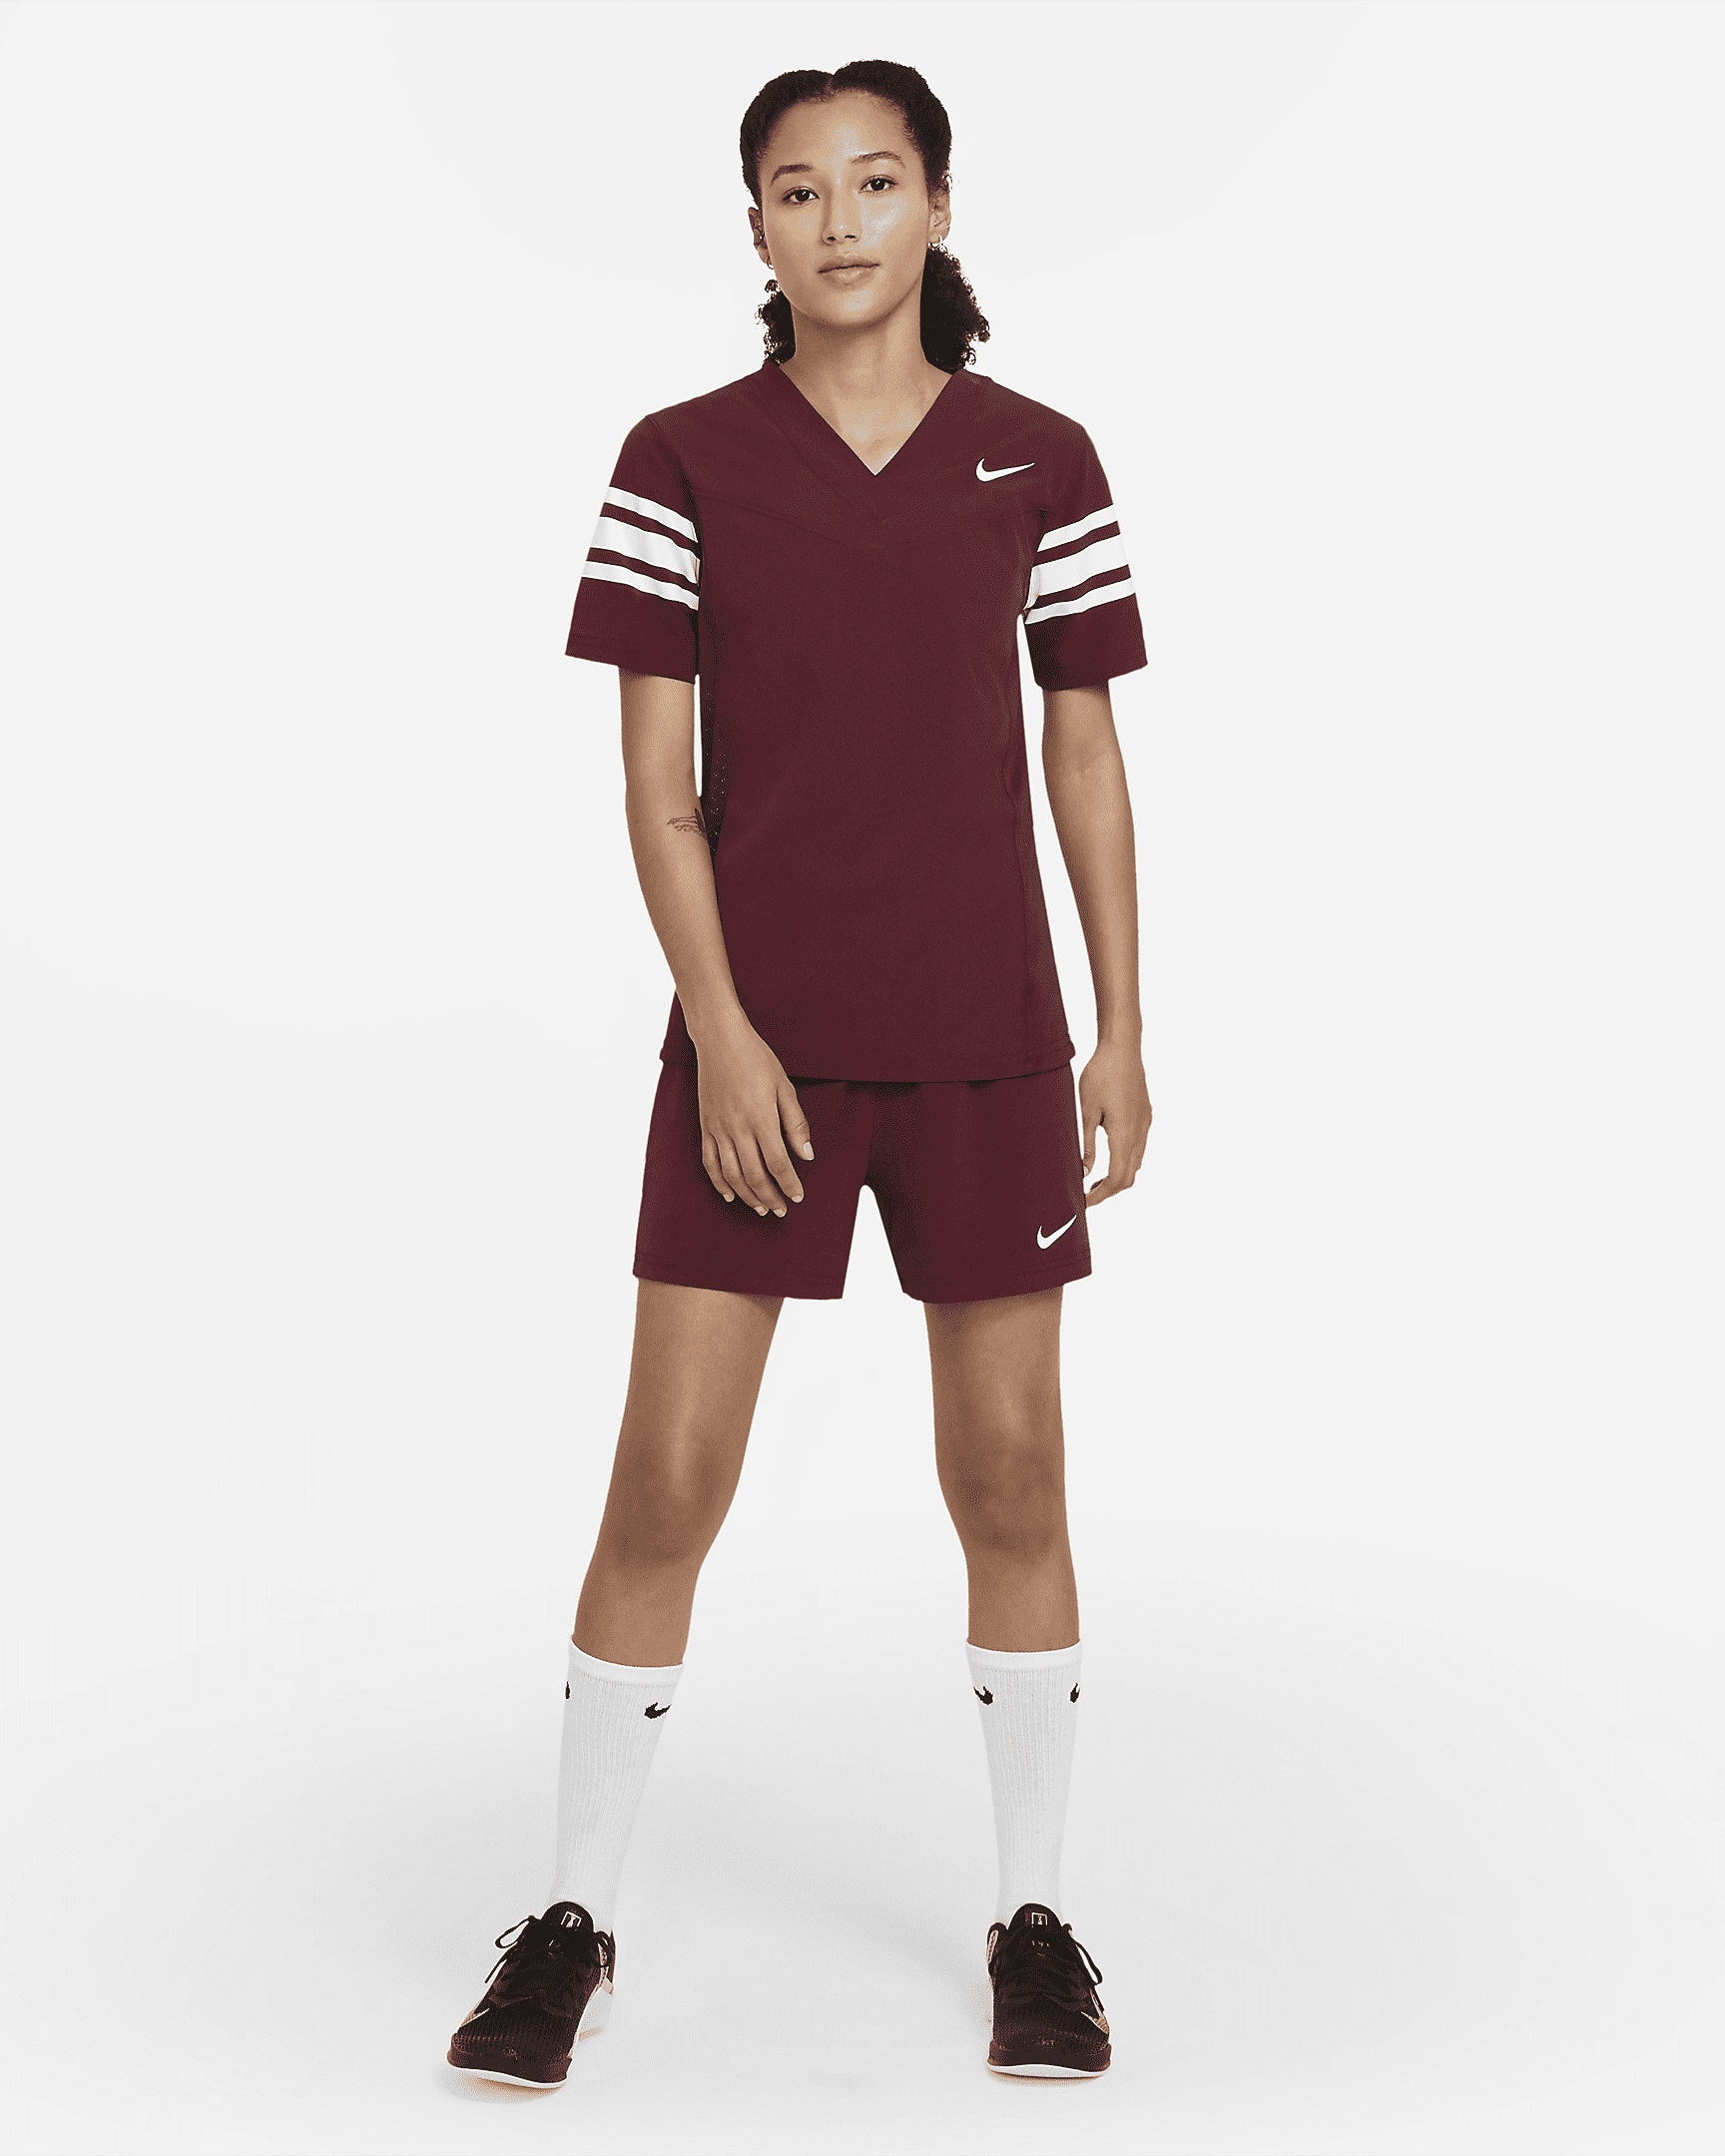 Nike Women's Vapor Flag Football Shorts - 6